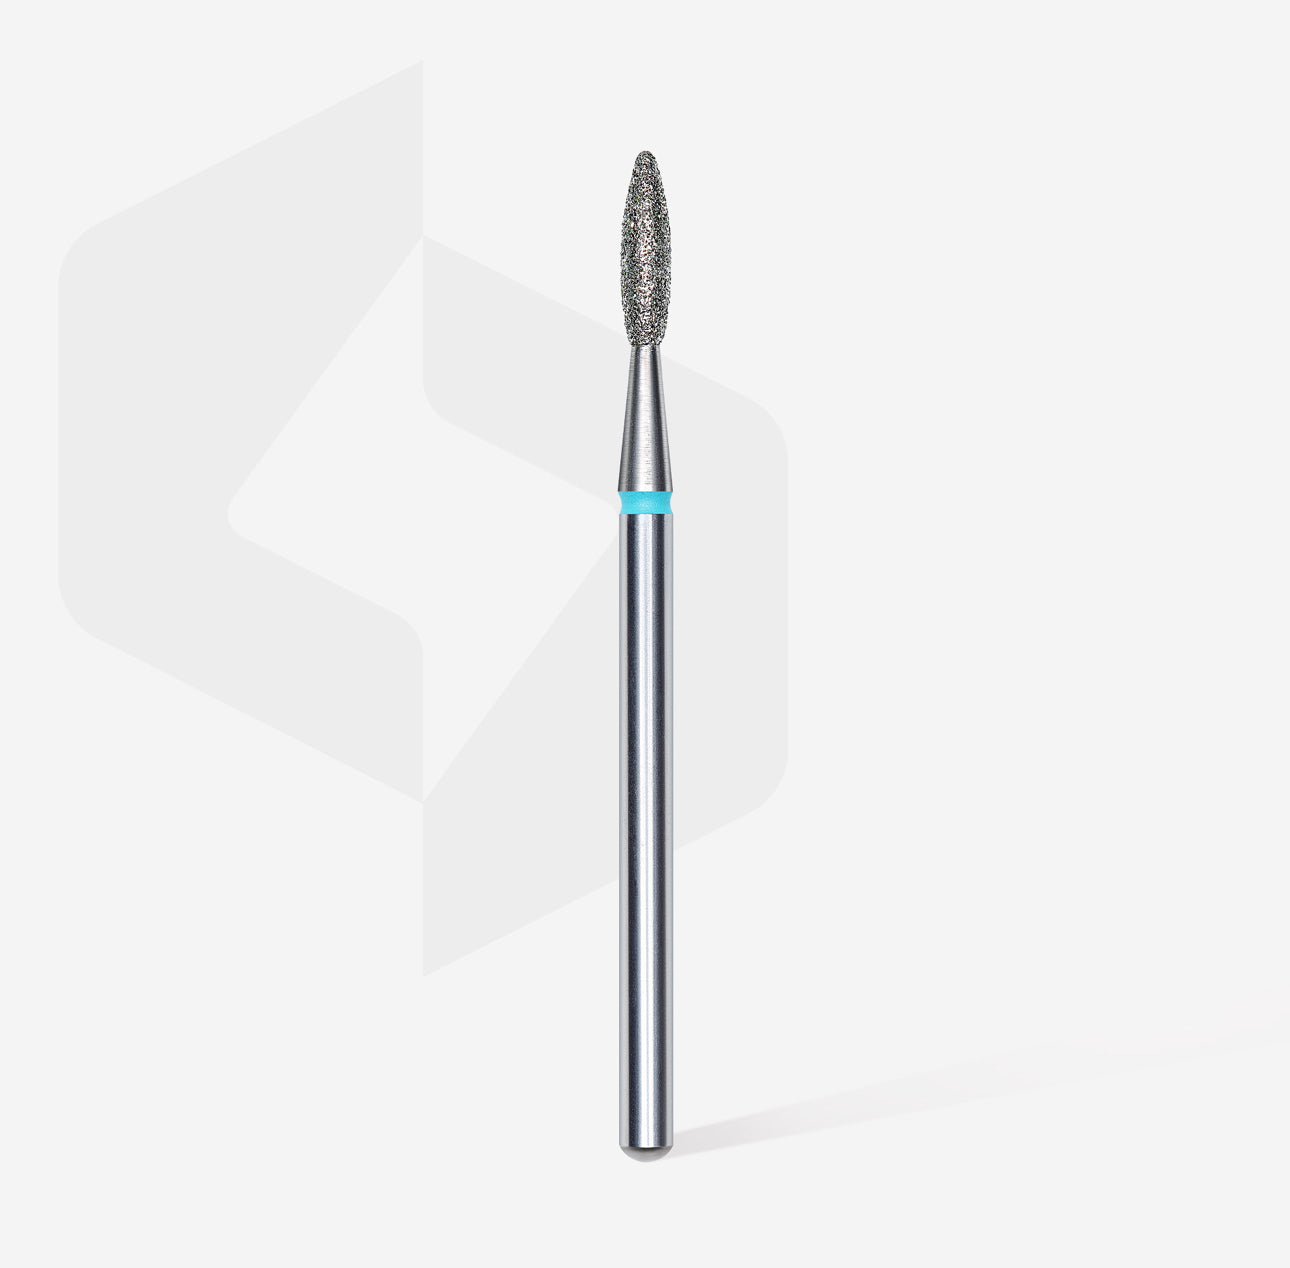 Diamond nail bit “flame”, sharp, blue, 2.1 mm